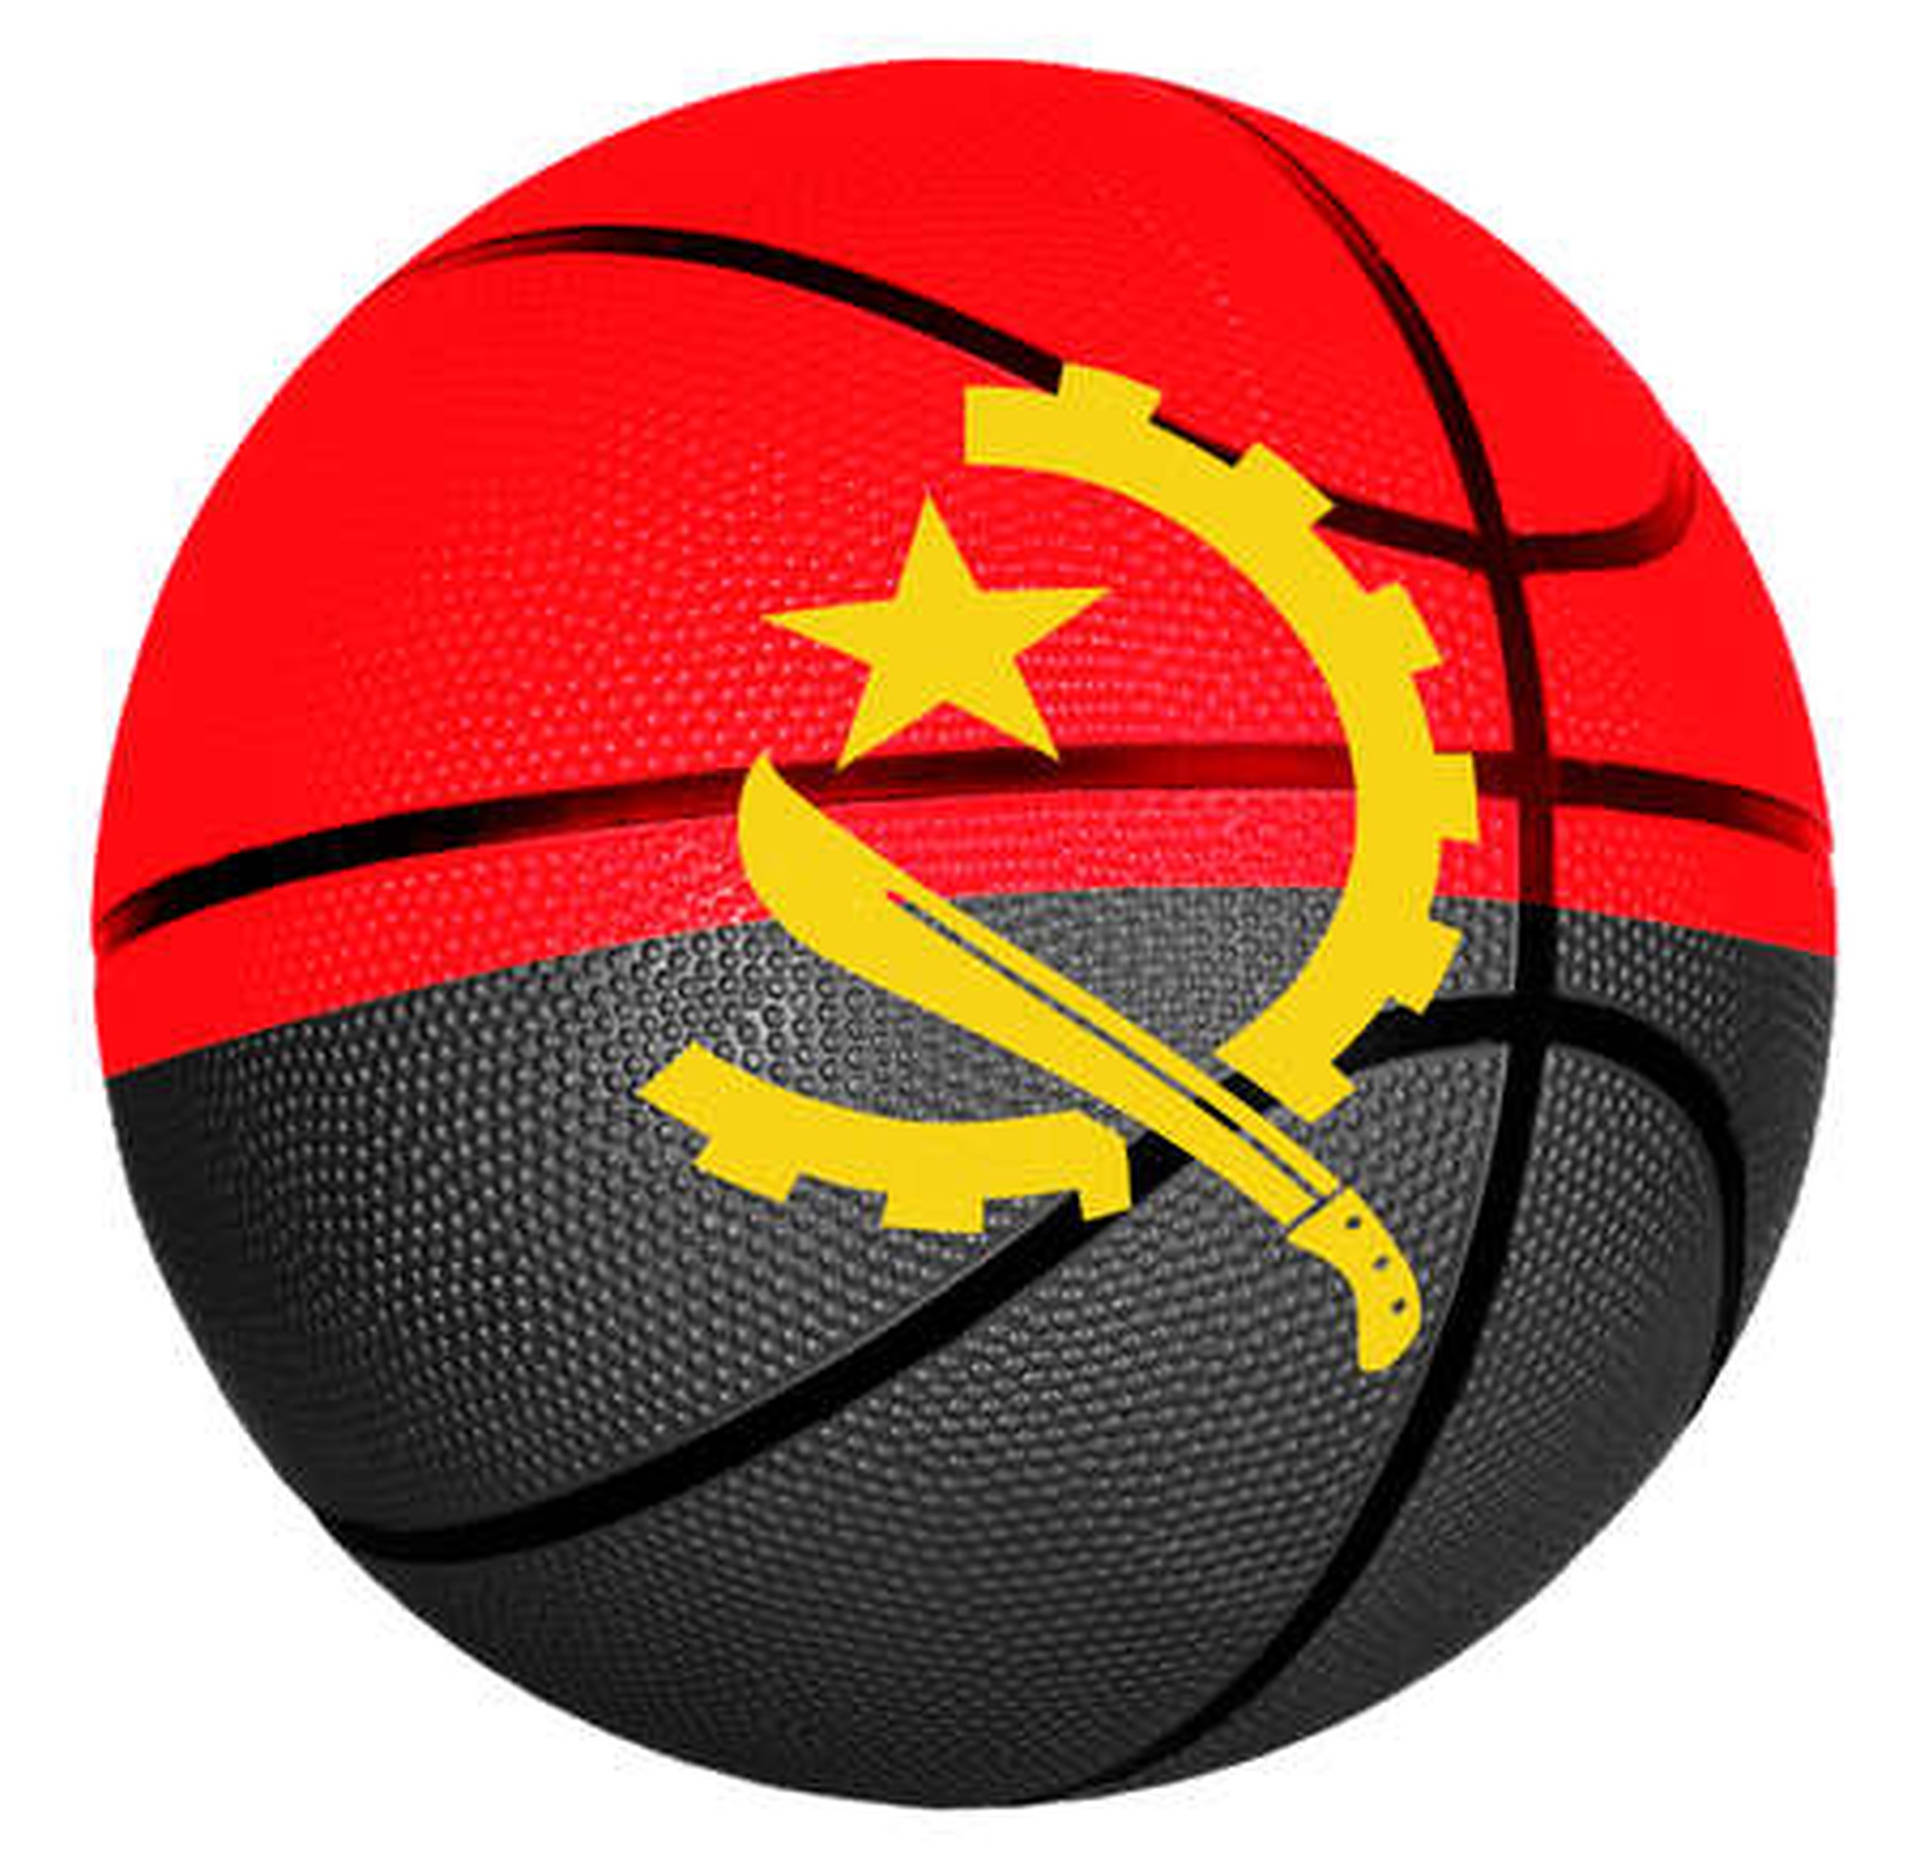 The Angolan Flag Sphere